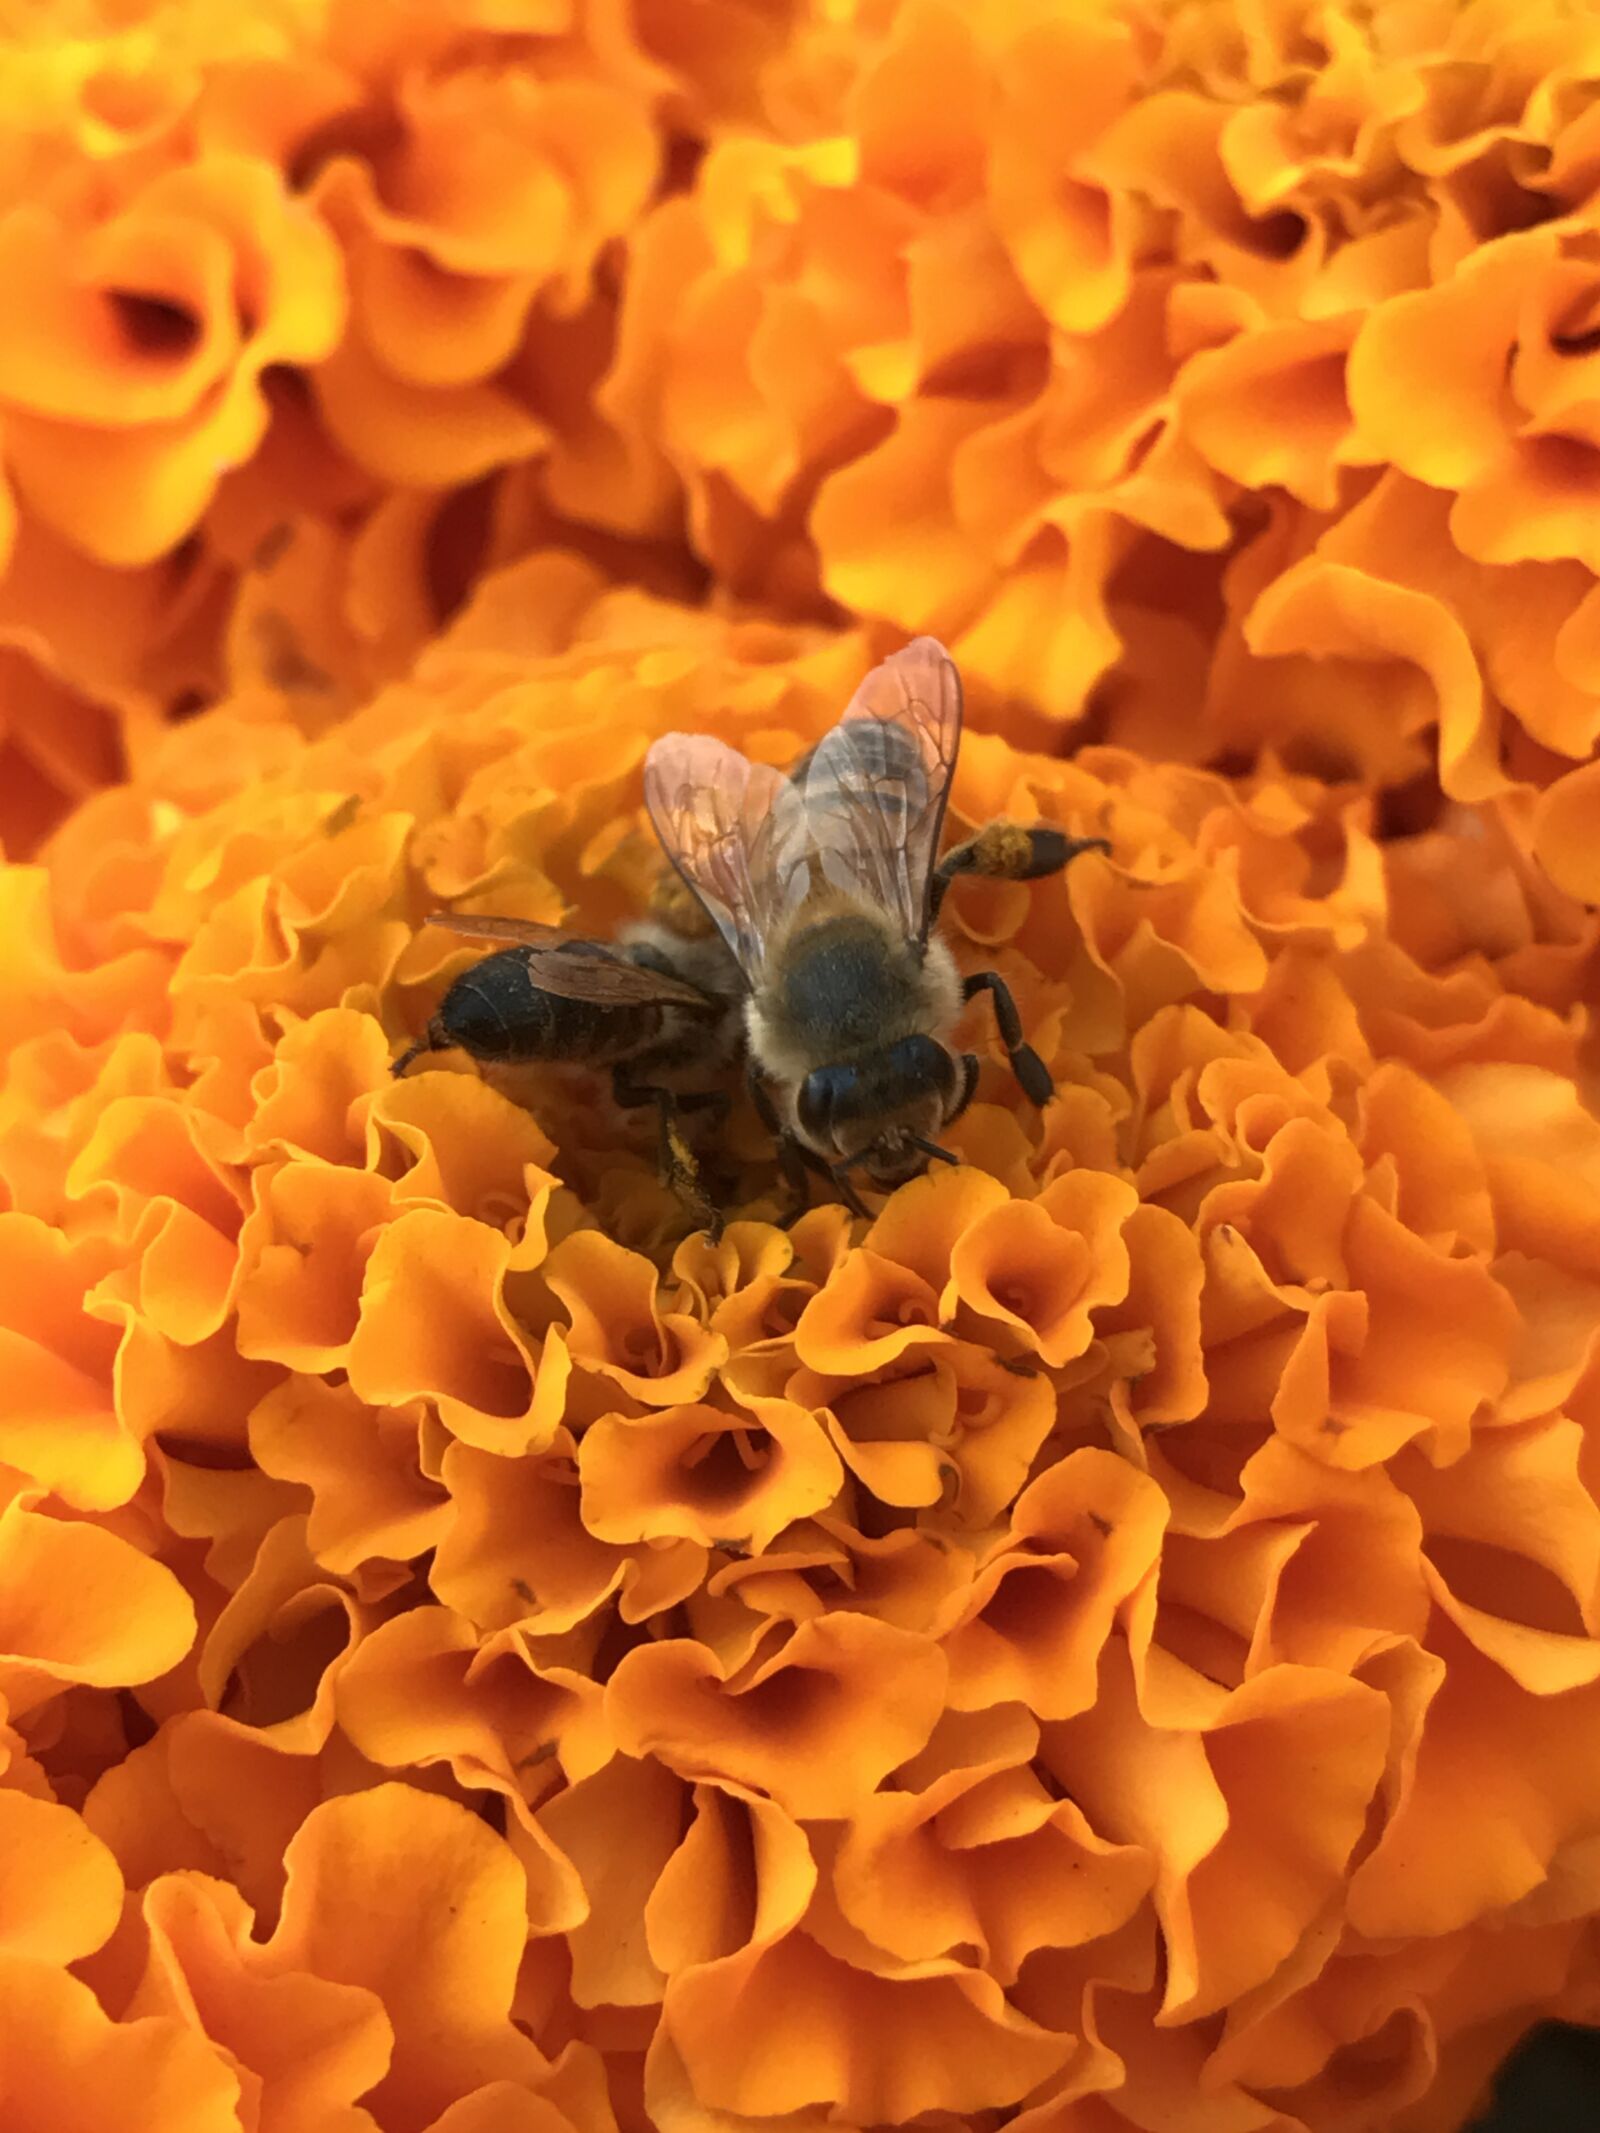 iPhone 7 Plus back iSight Duo camera 3.99mm f/1.8 sample photo. Bees, flowers, orange photography